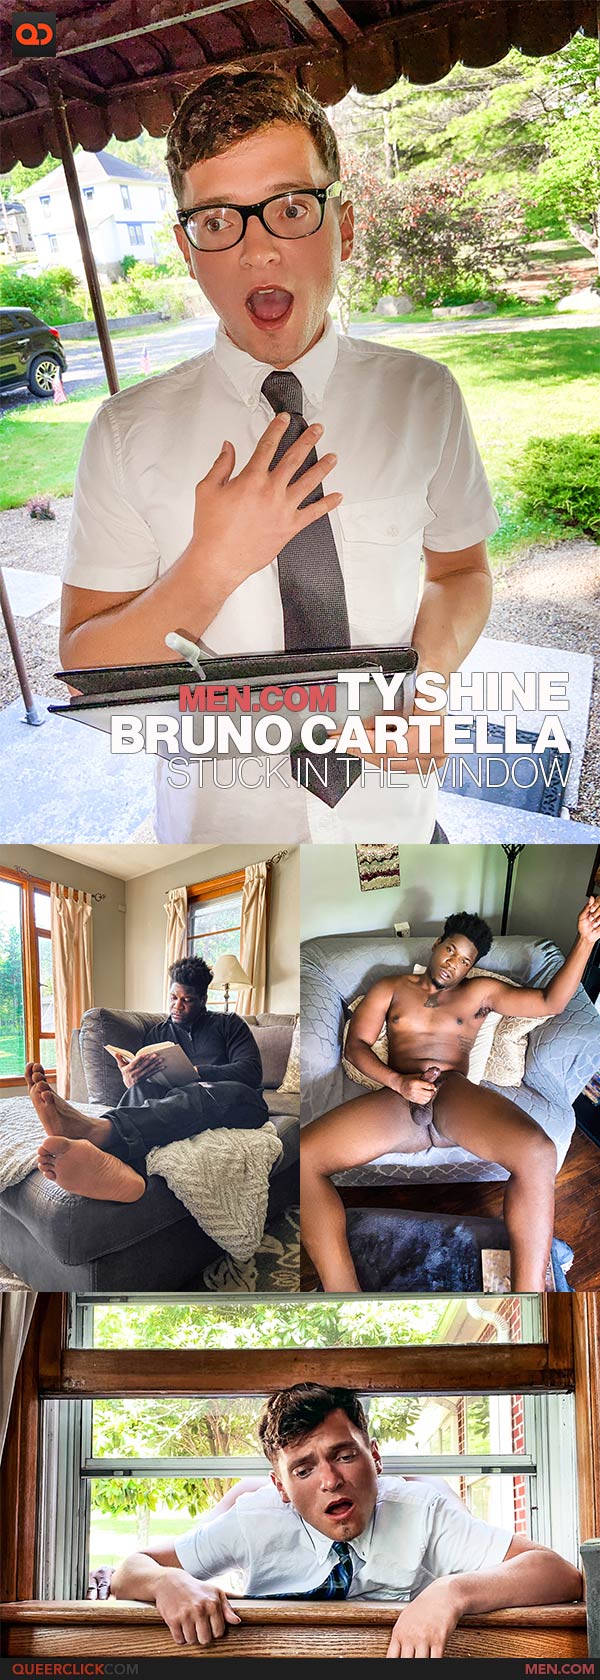 Men.com: Ty Shine and Bruno Cartella